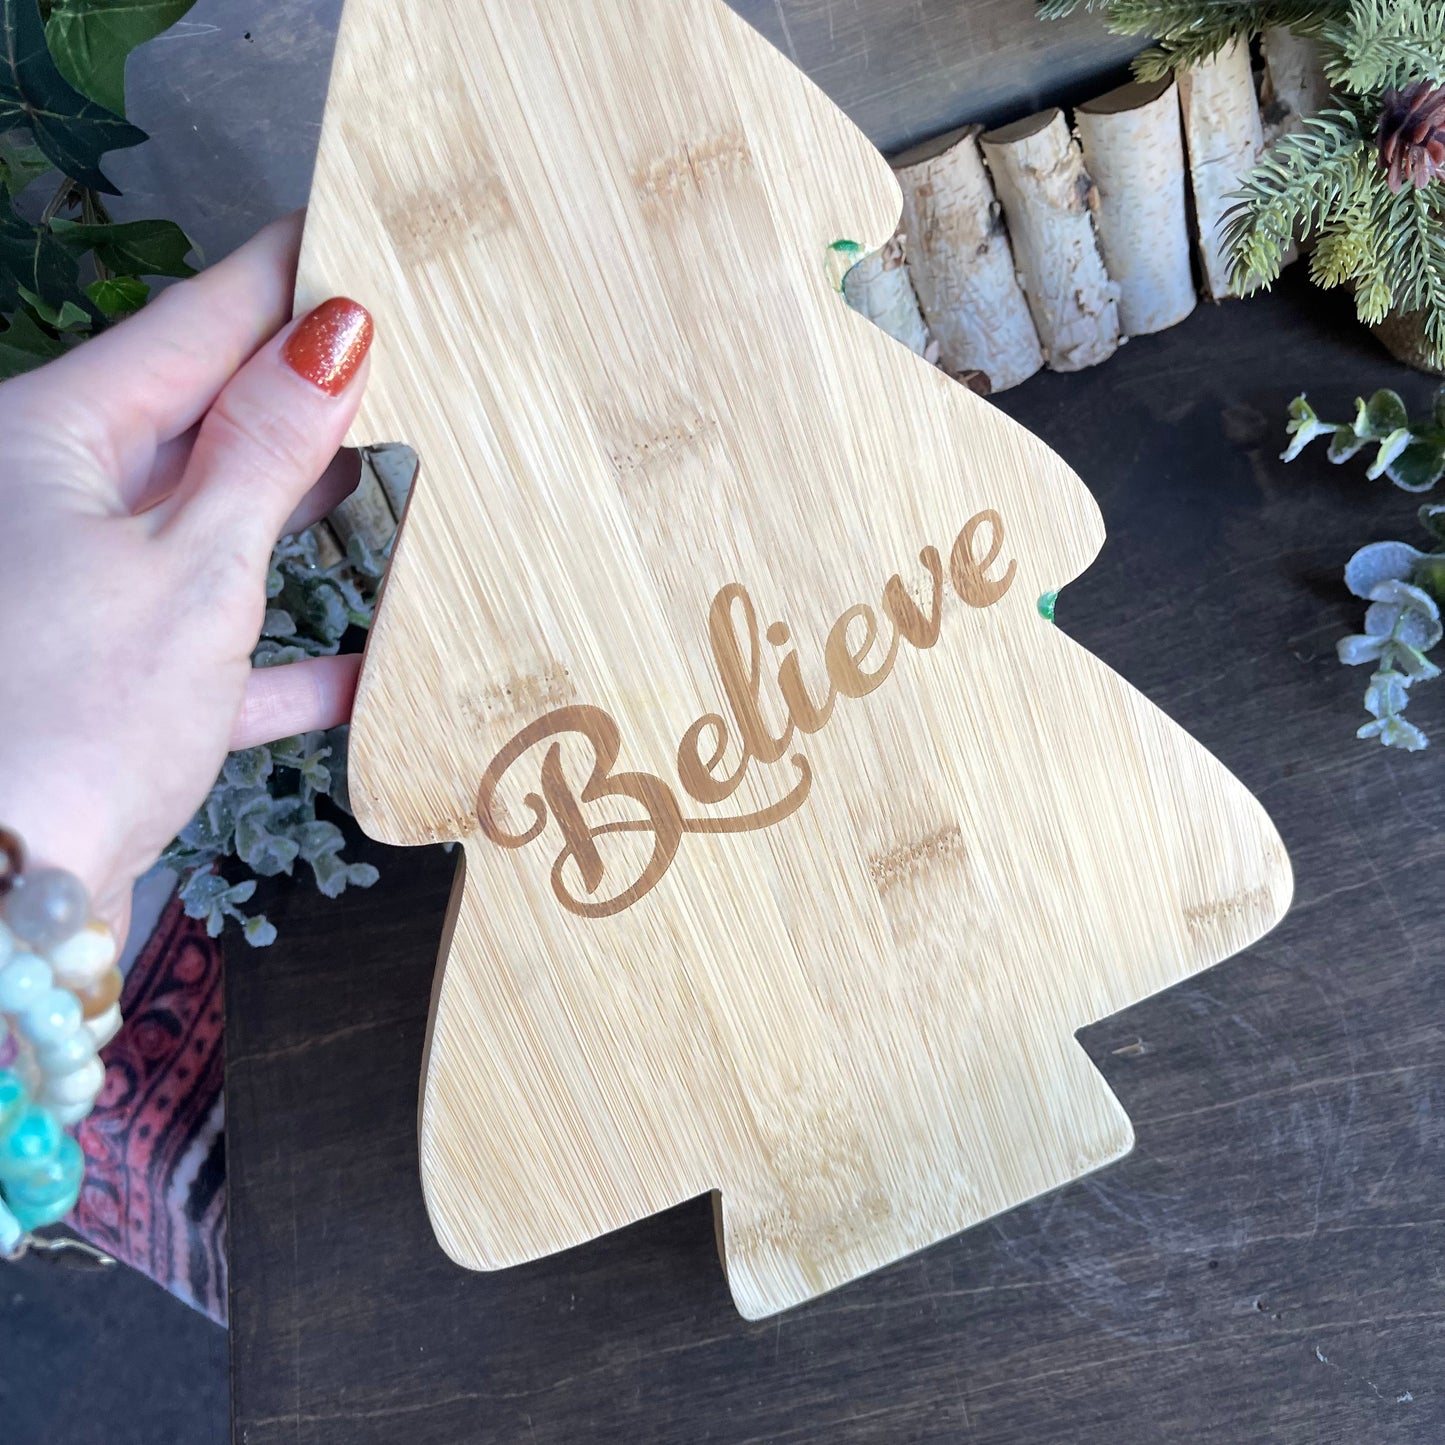 Resin Christmas Tree (cutting board) - 12/13 @ 6pm